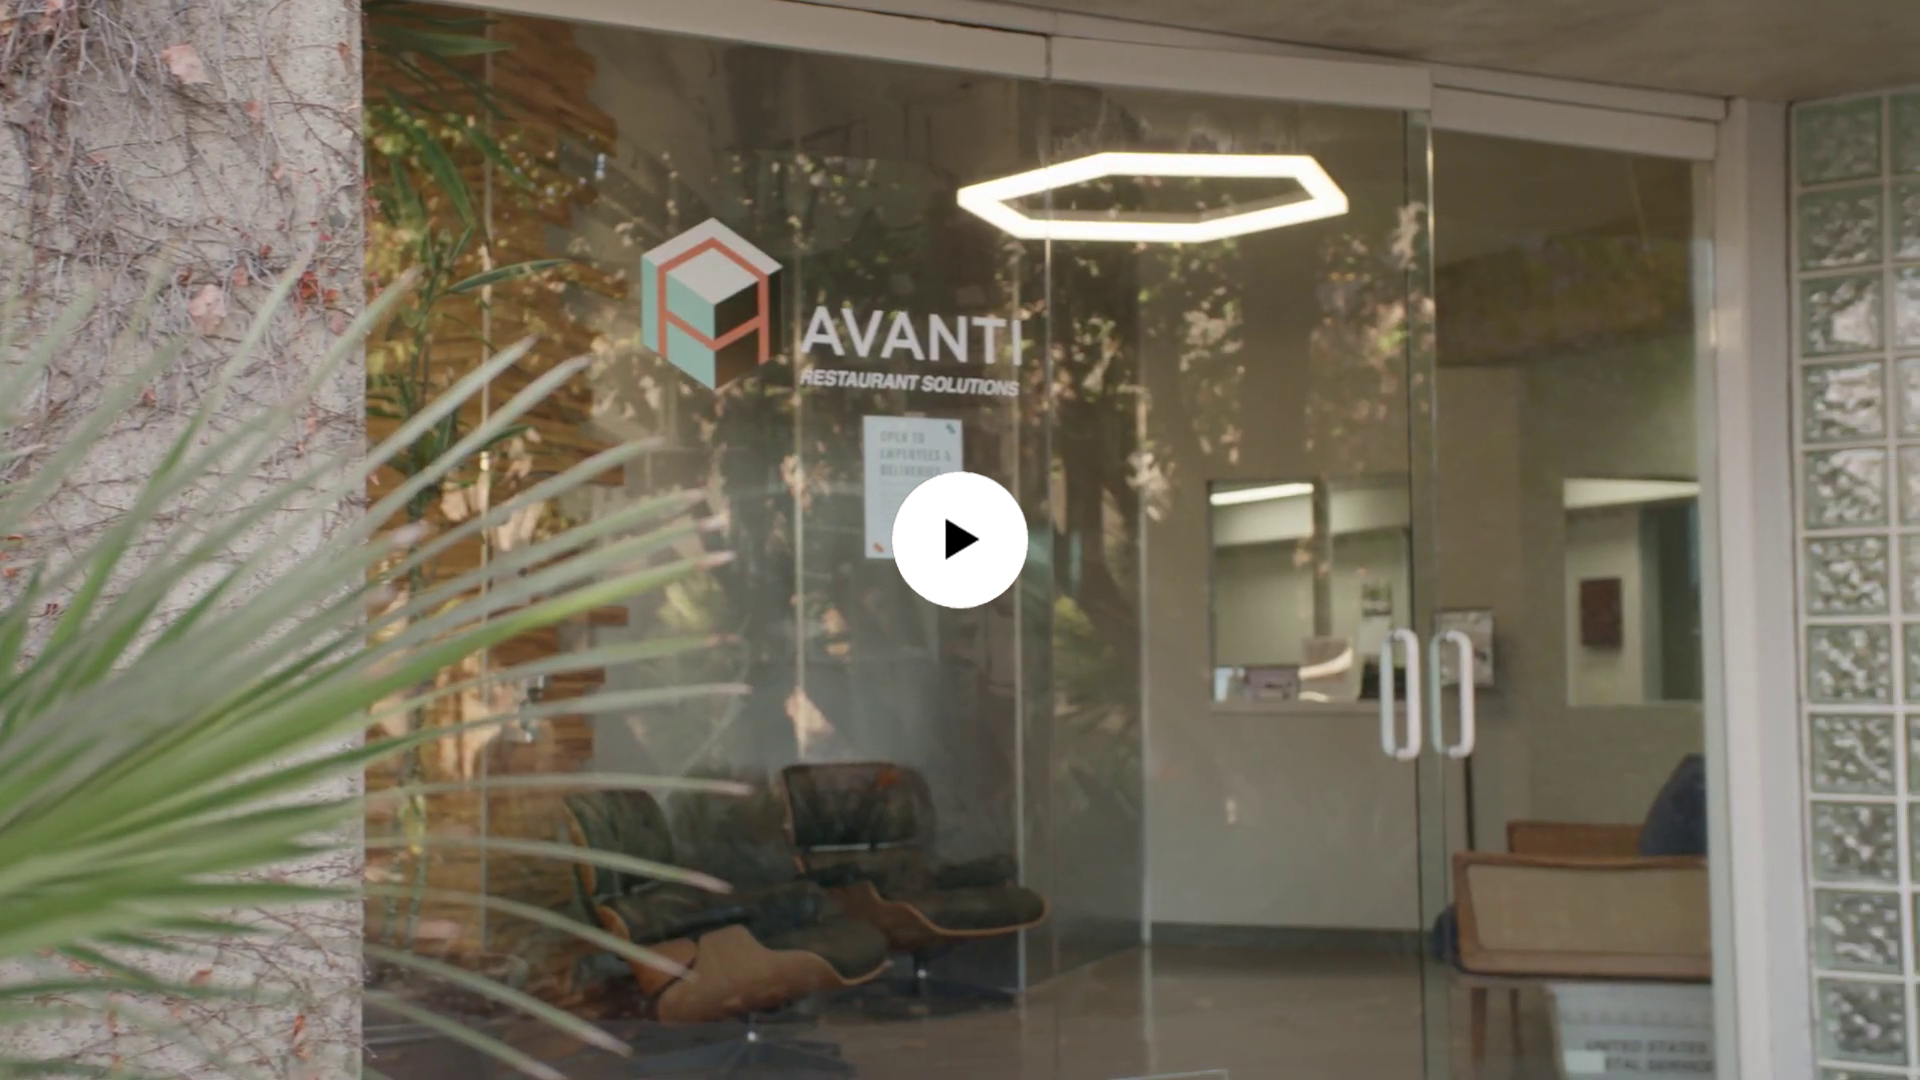 Video About Avanti Restaurant Solutions